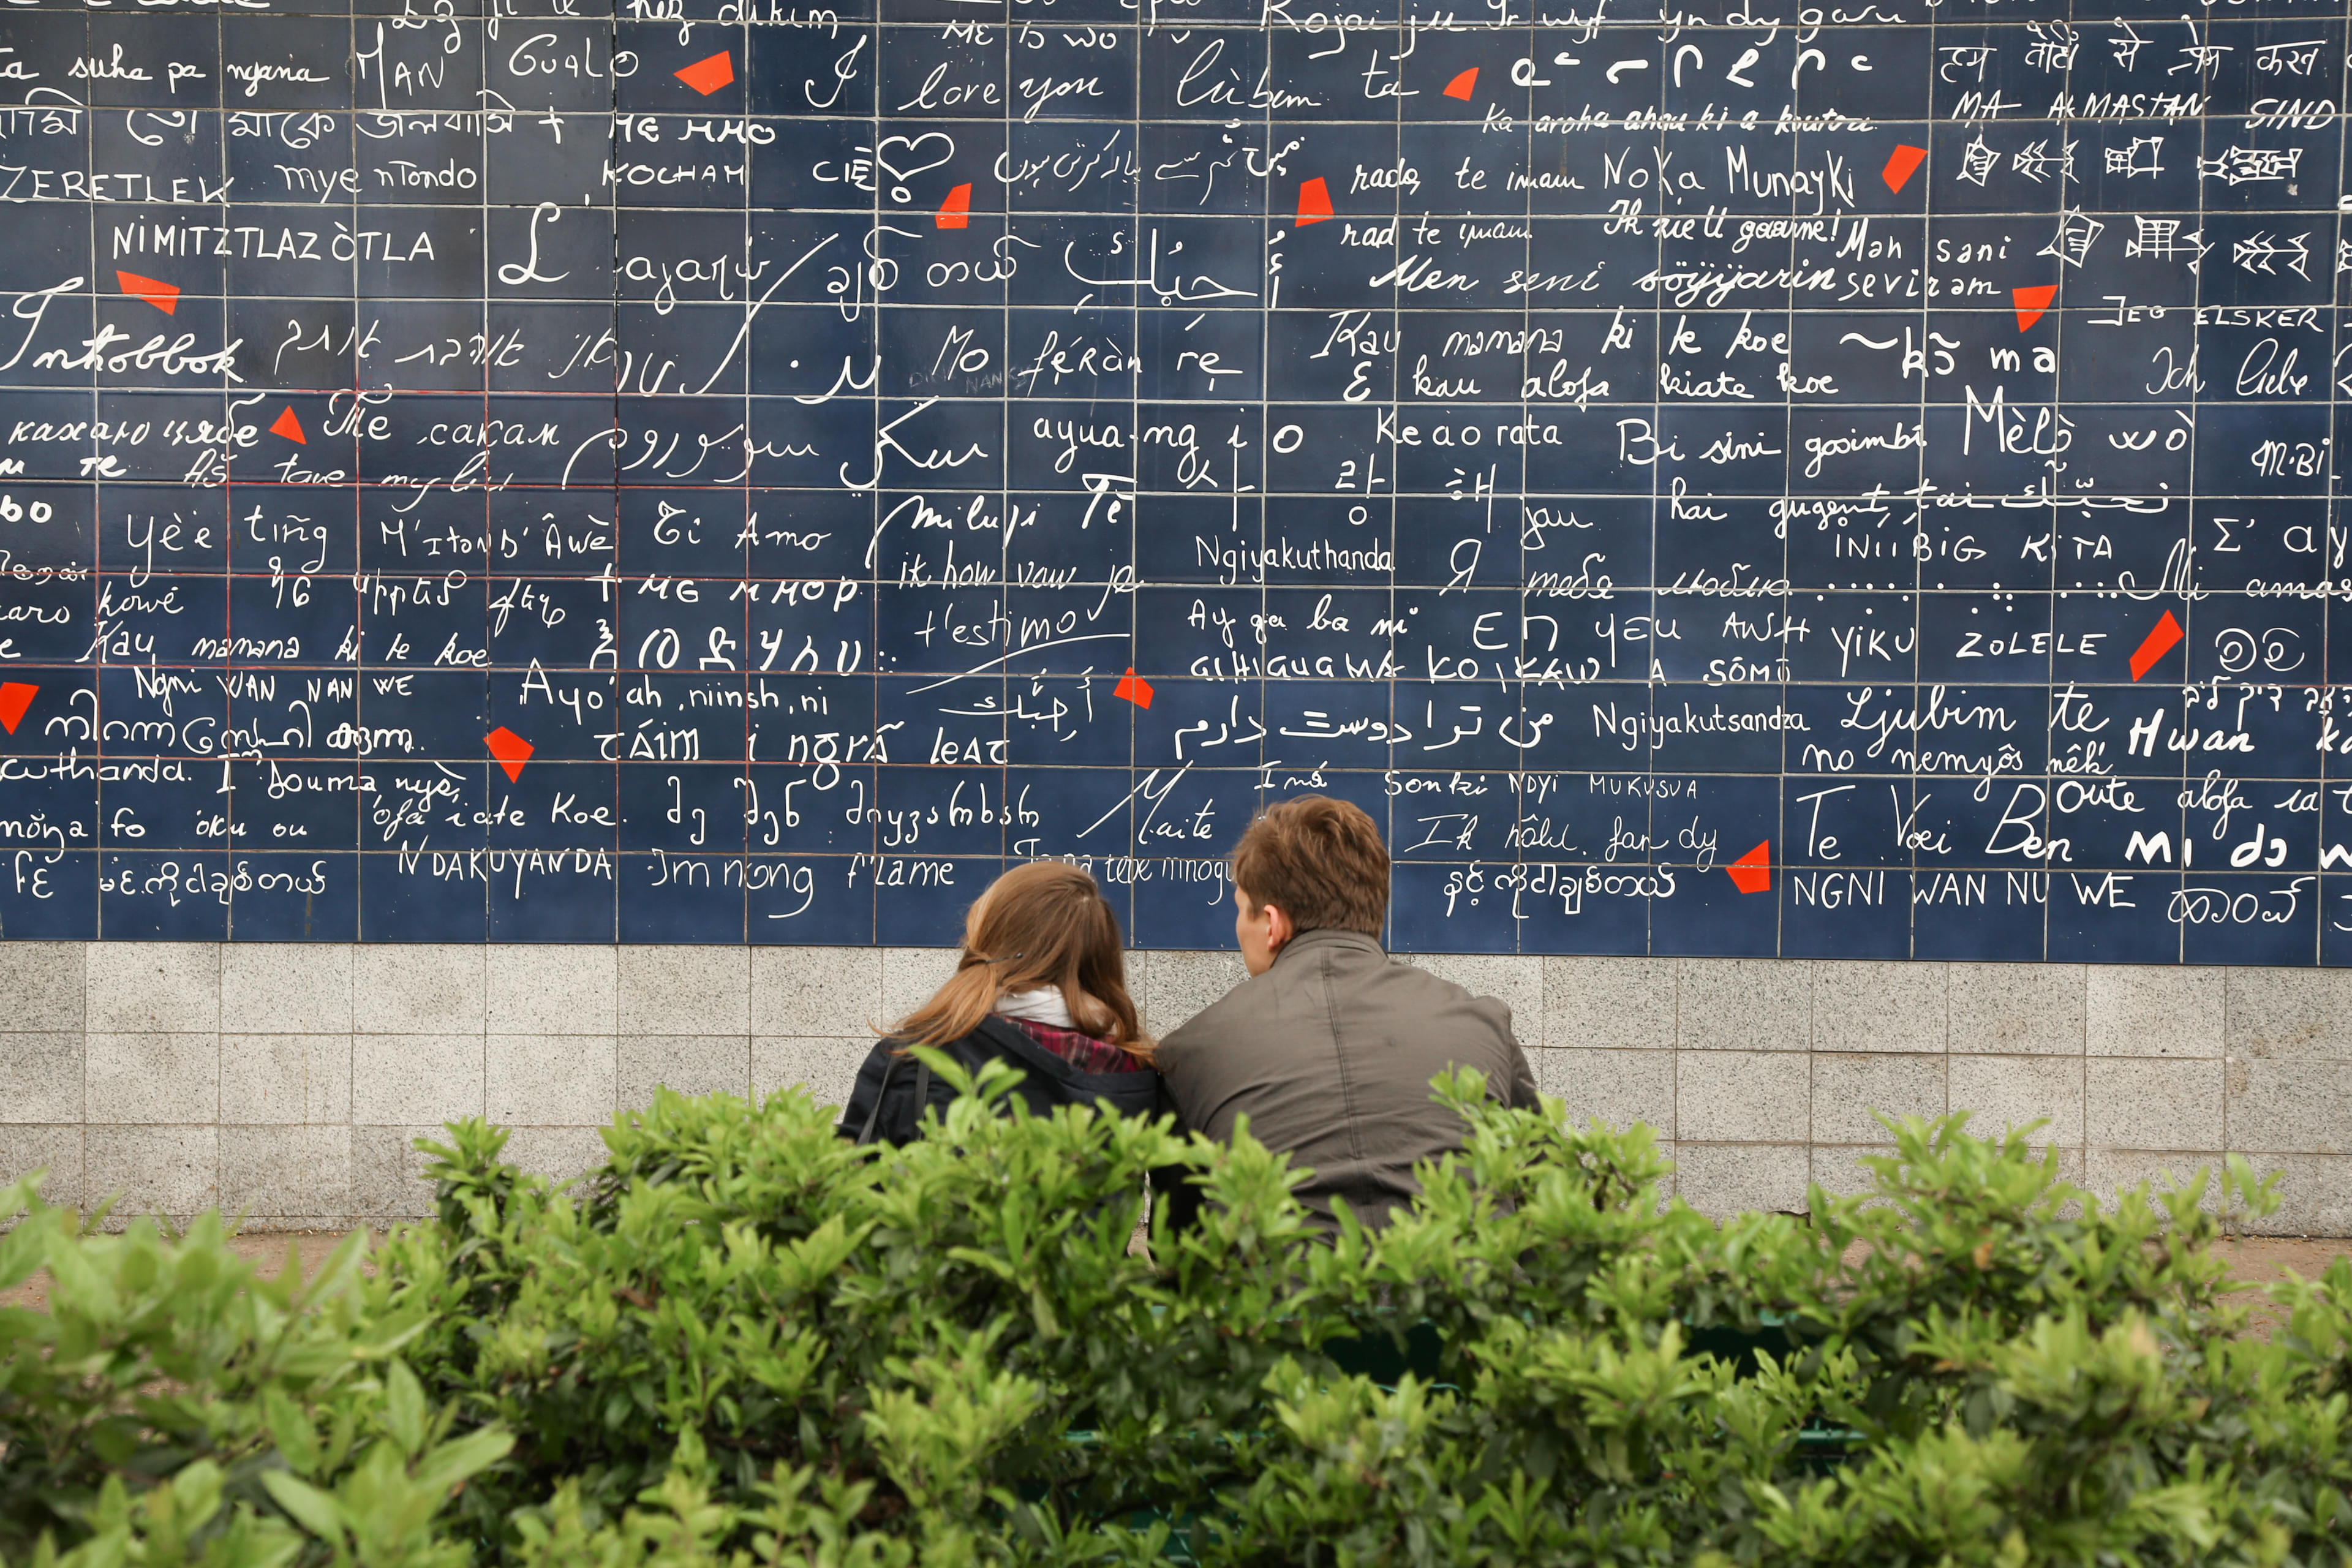 Wall of Love in Paris